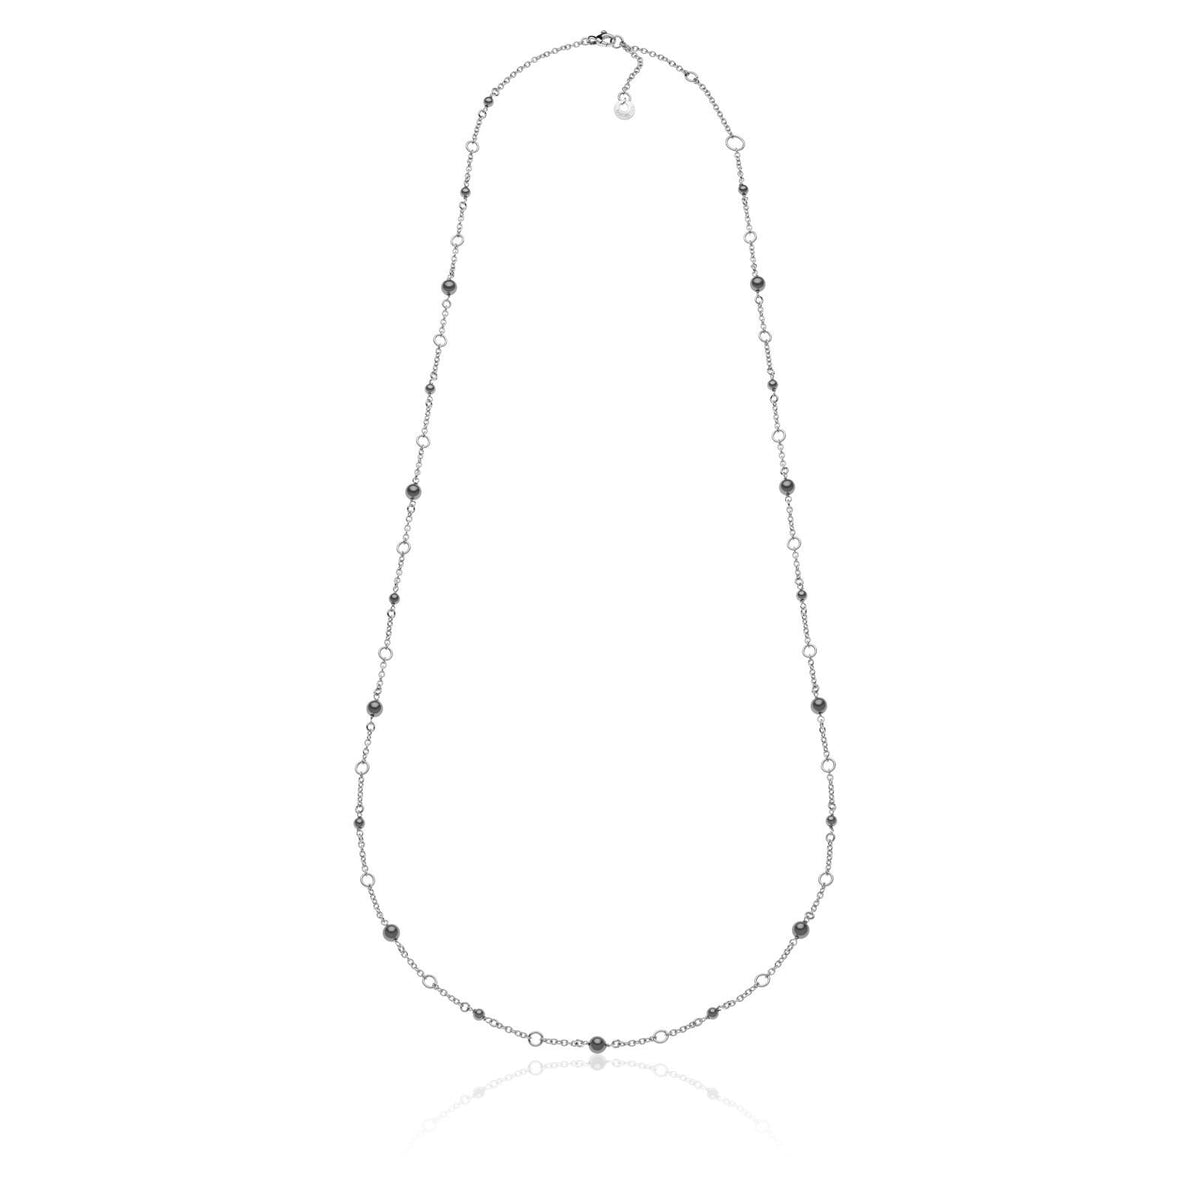 Collana lunga in argento con perle nere Unoaerre 724YHW3263070 6101